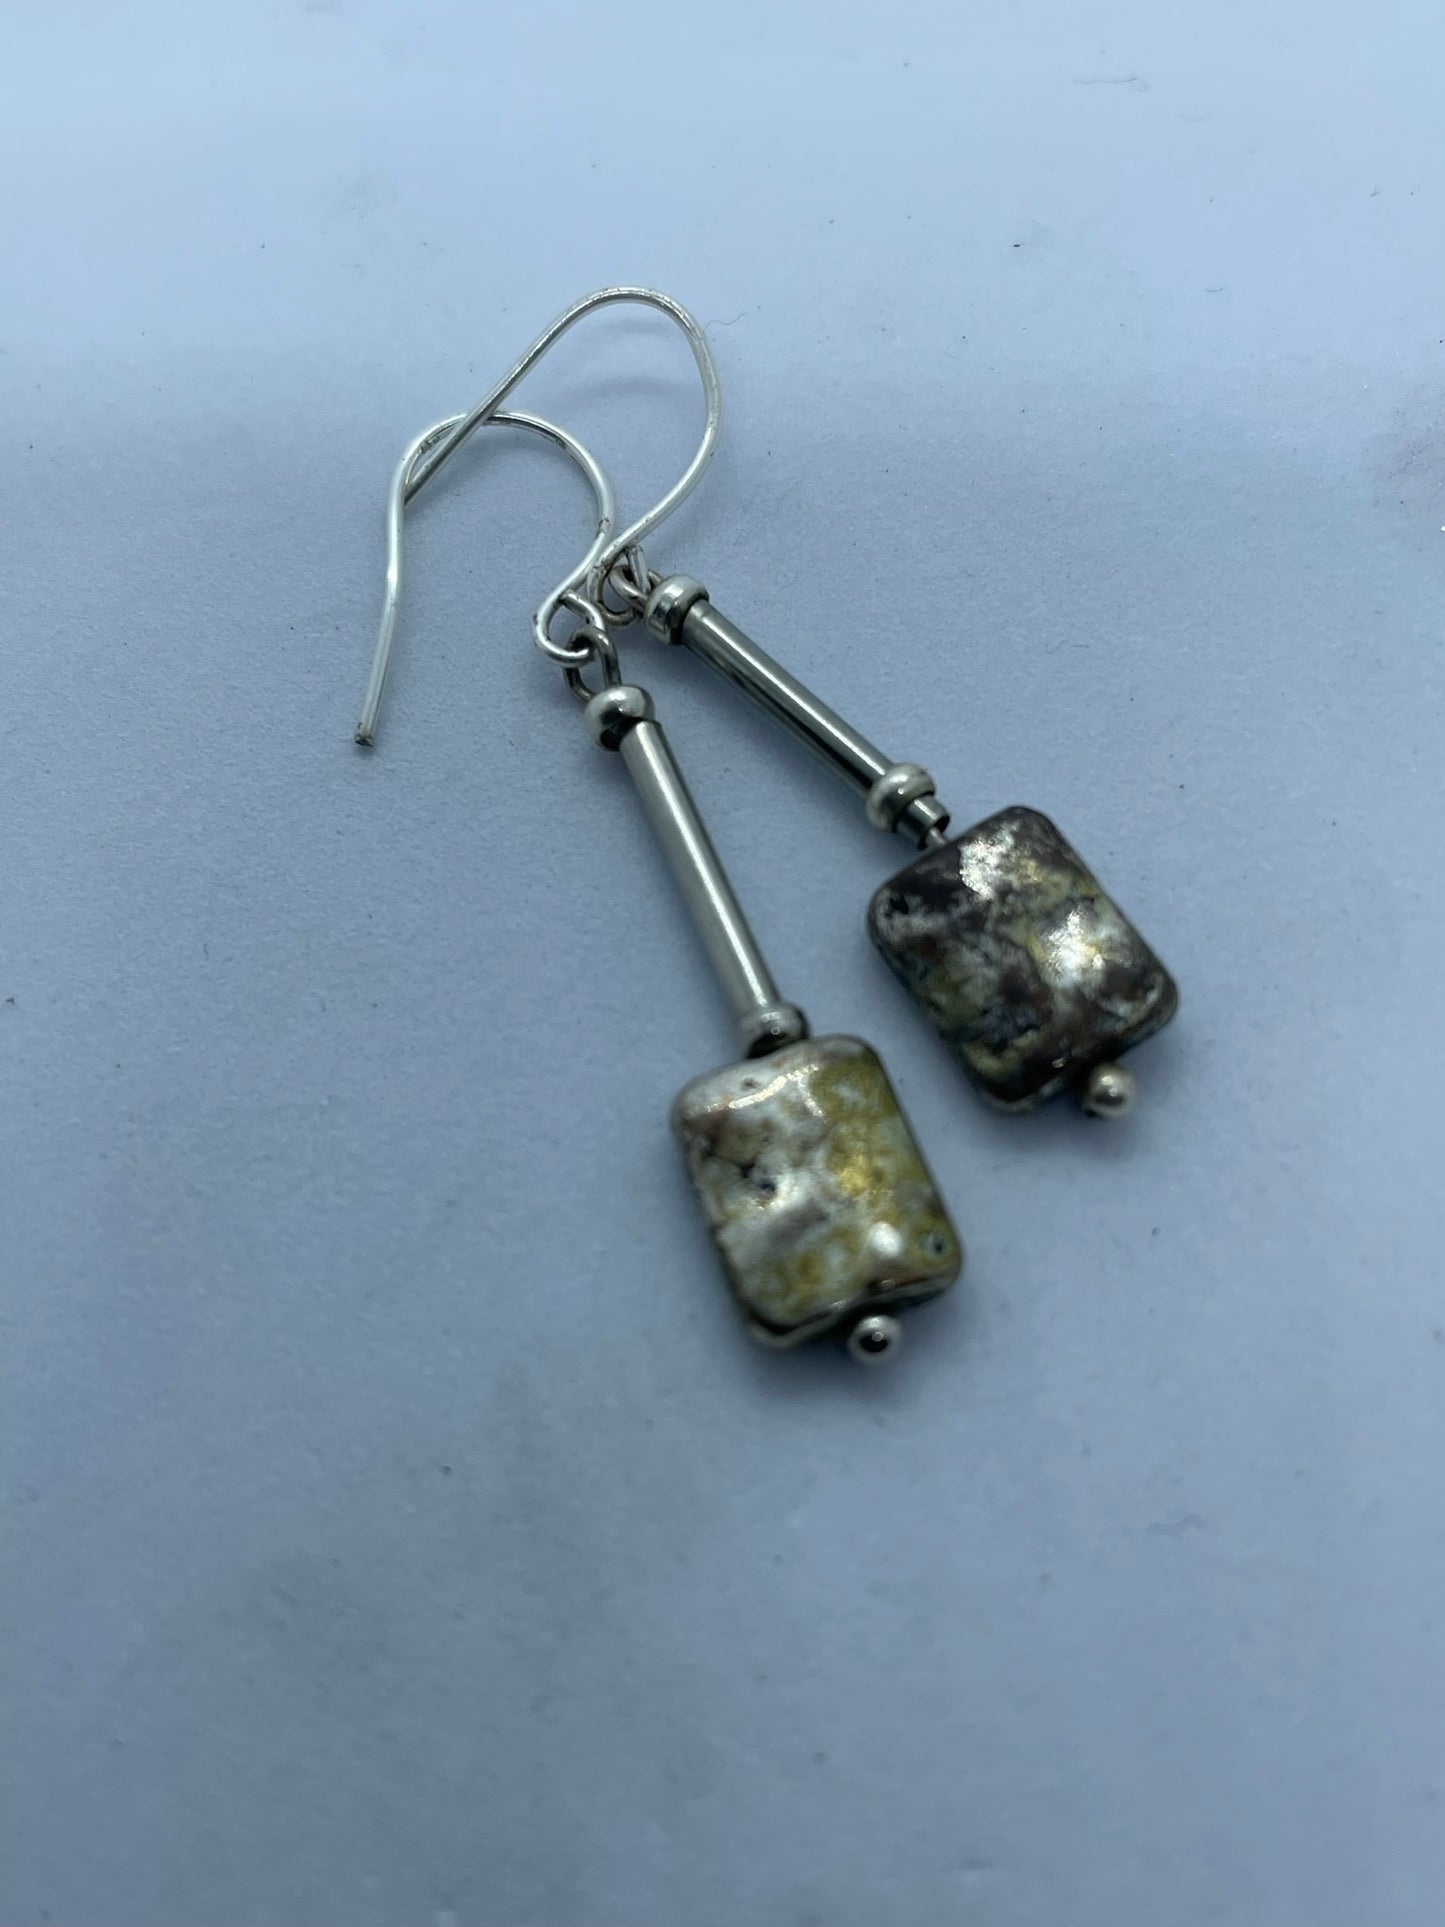 Wire with silver oblong drop earrings